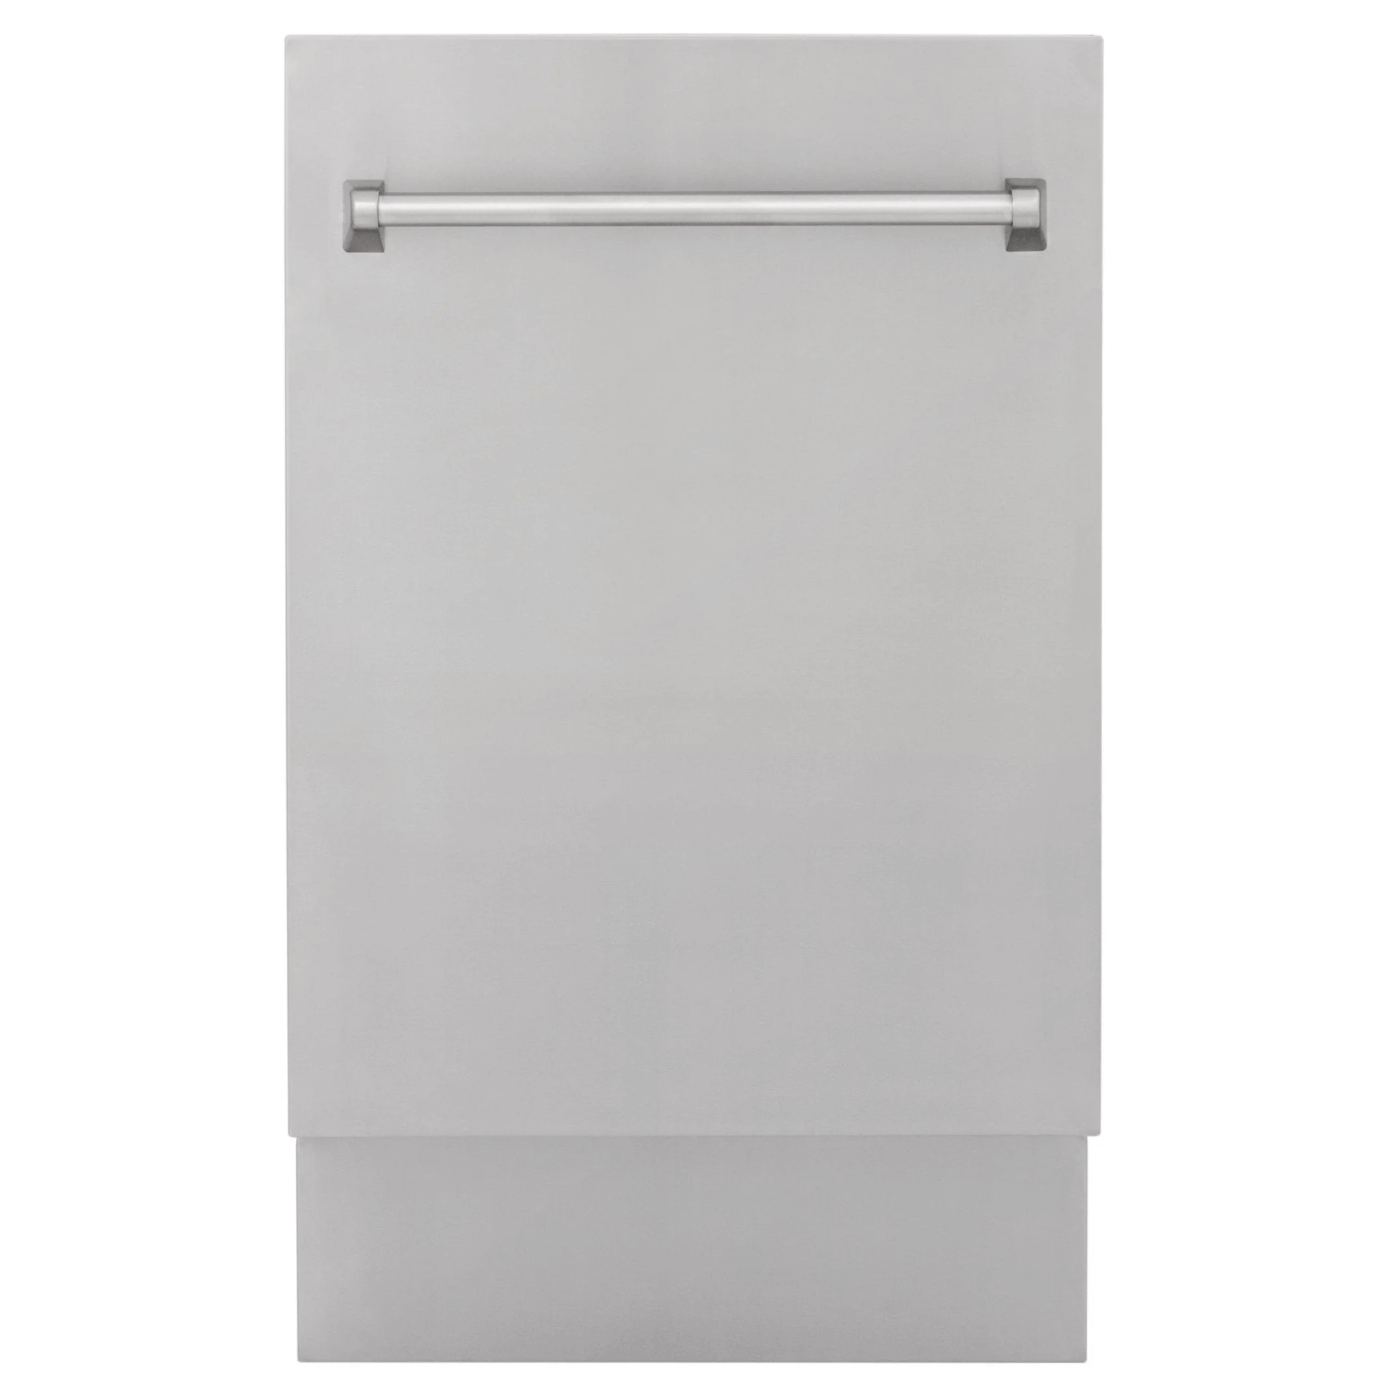 ZLINE Tallac Dishwasher - white background